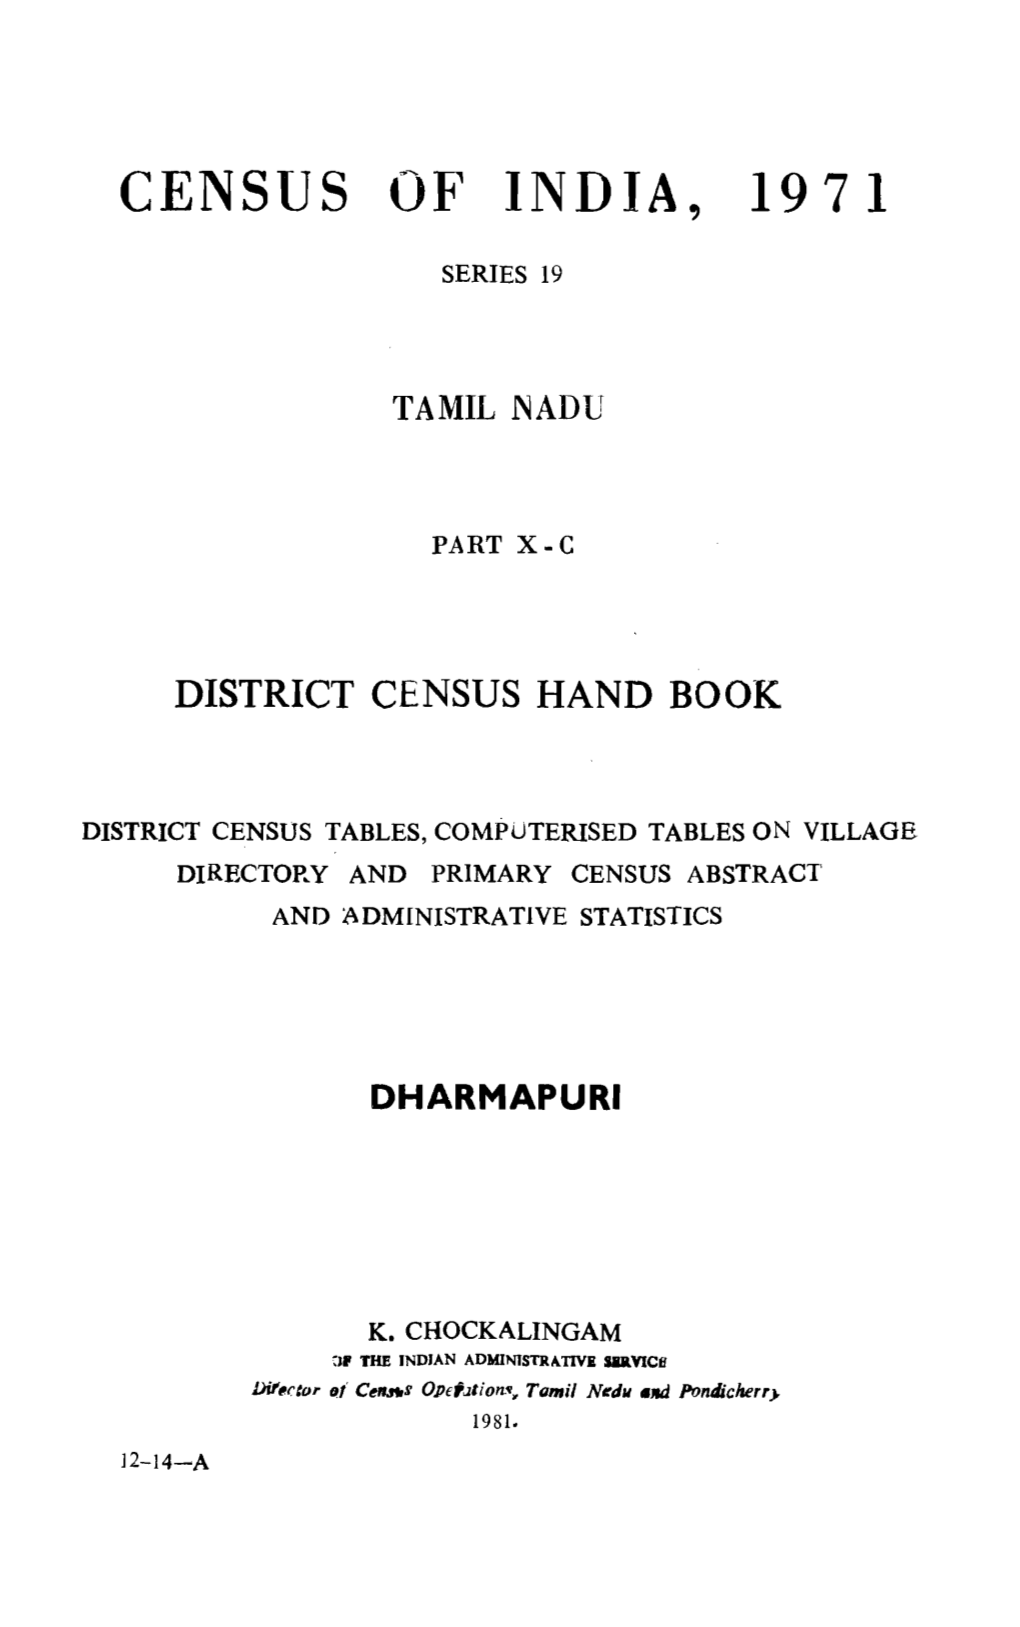 District Census Handbook, Dharmapuri, Part X-C, Series-19